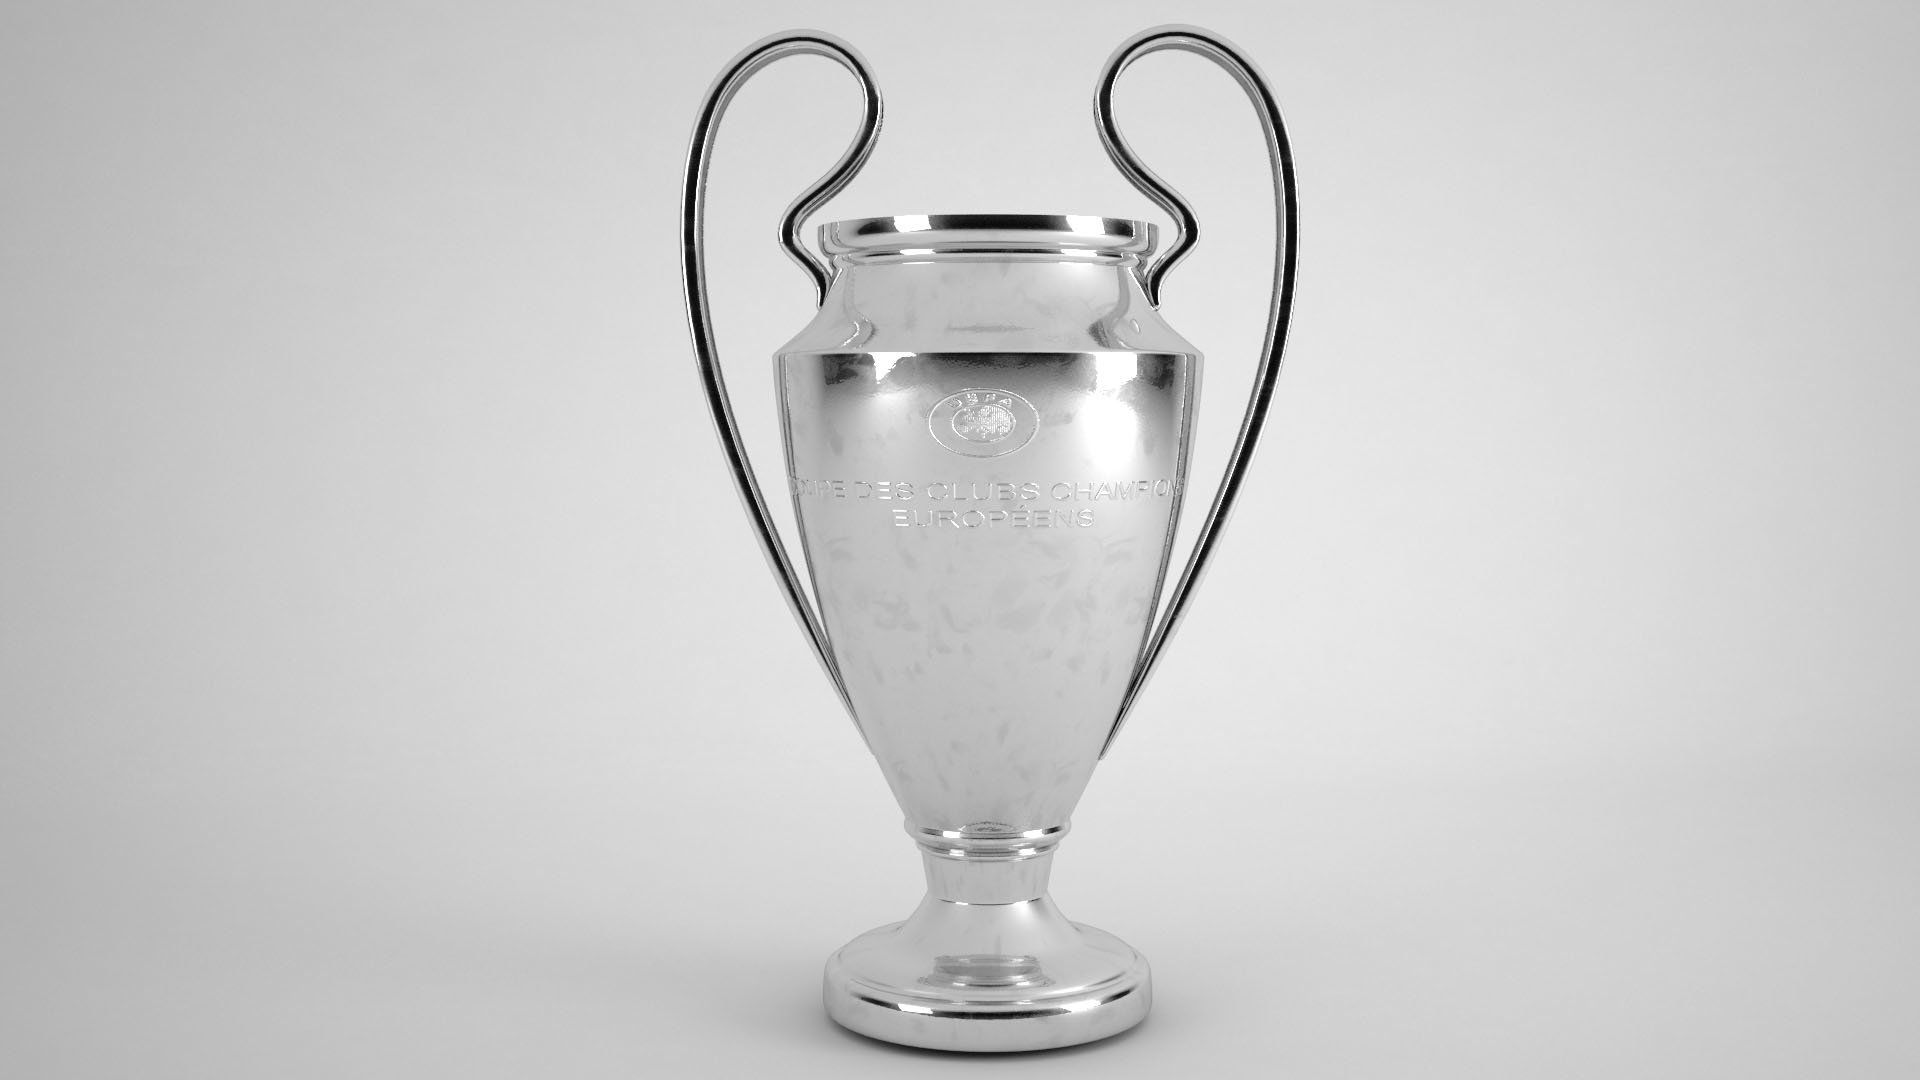 Uefa Champions League Trophy, Glenn De Clippeleir